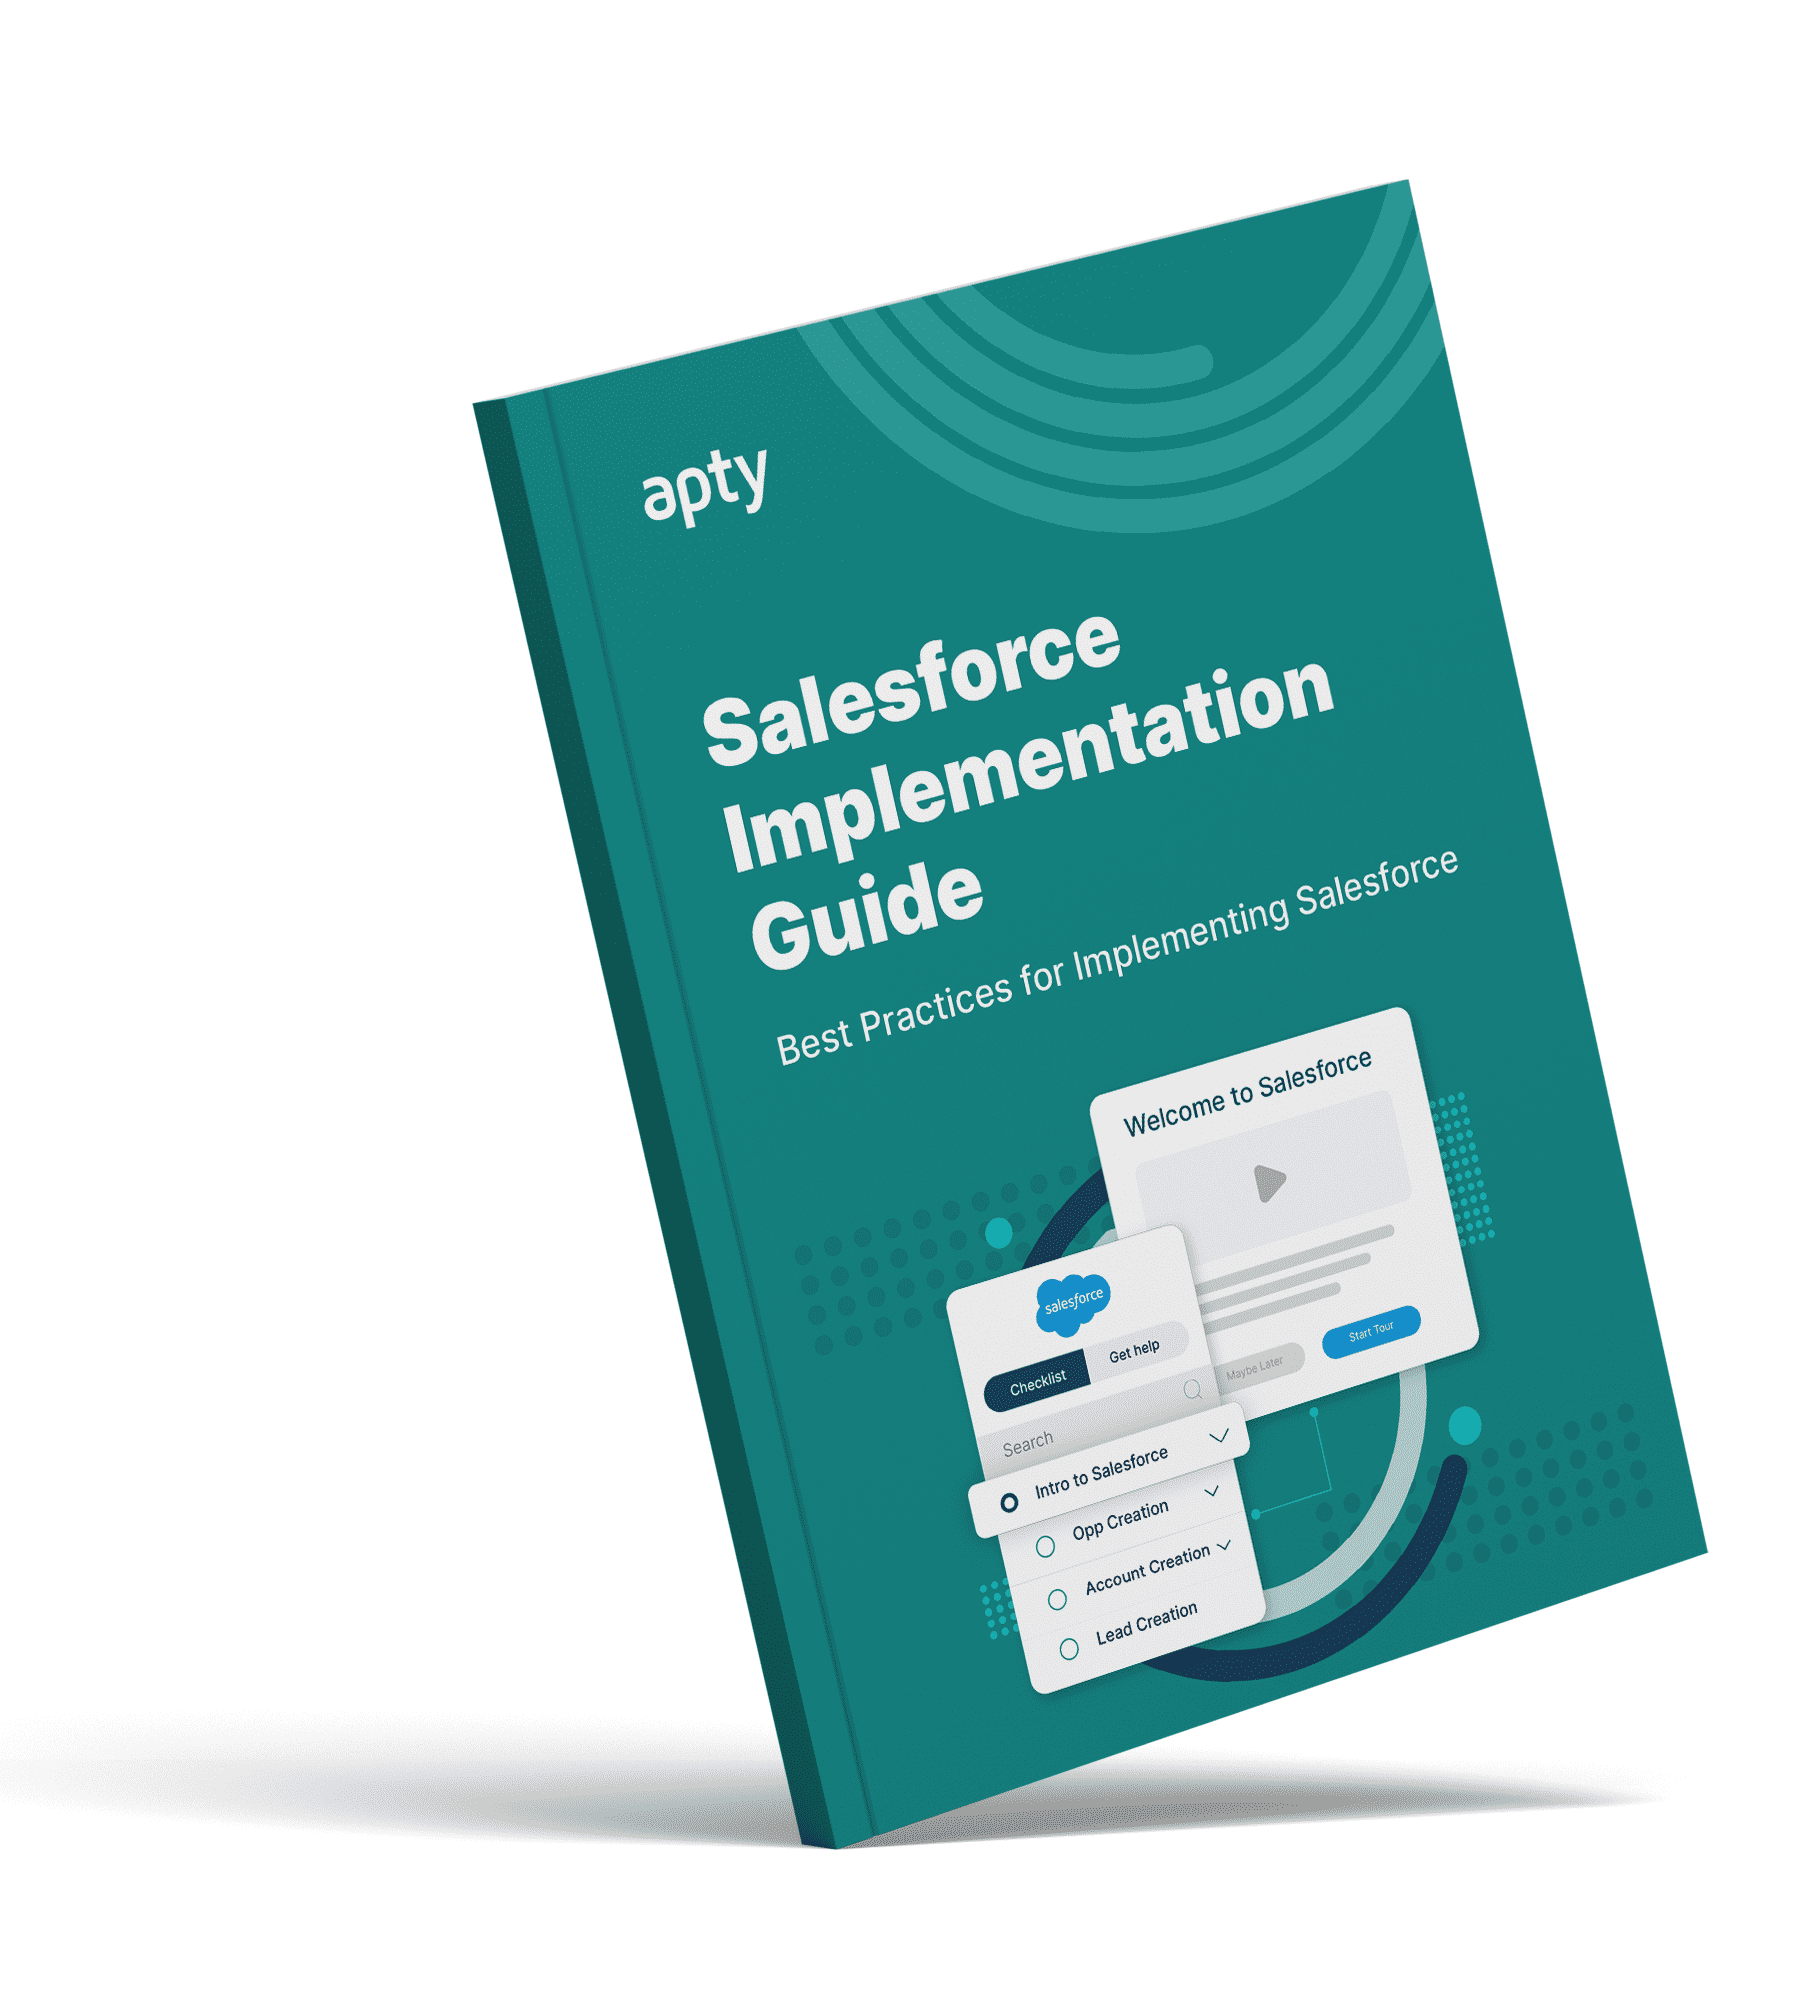 Salesforce implementation Guide